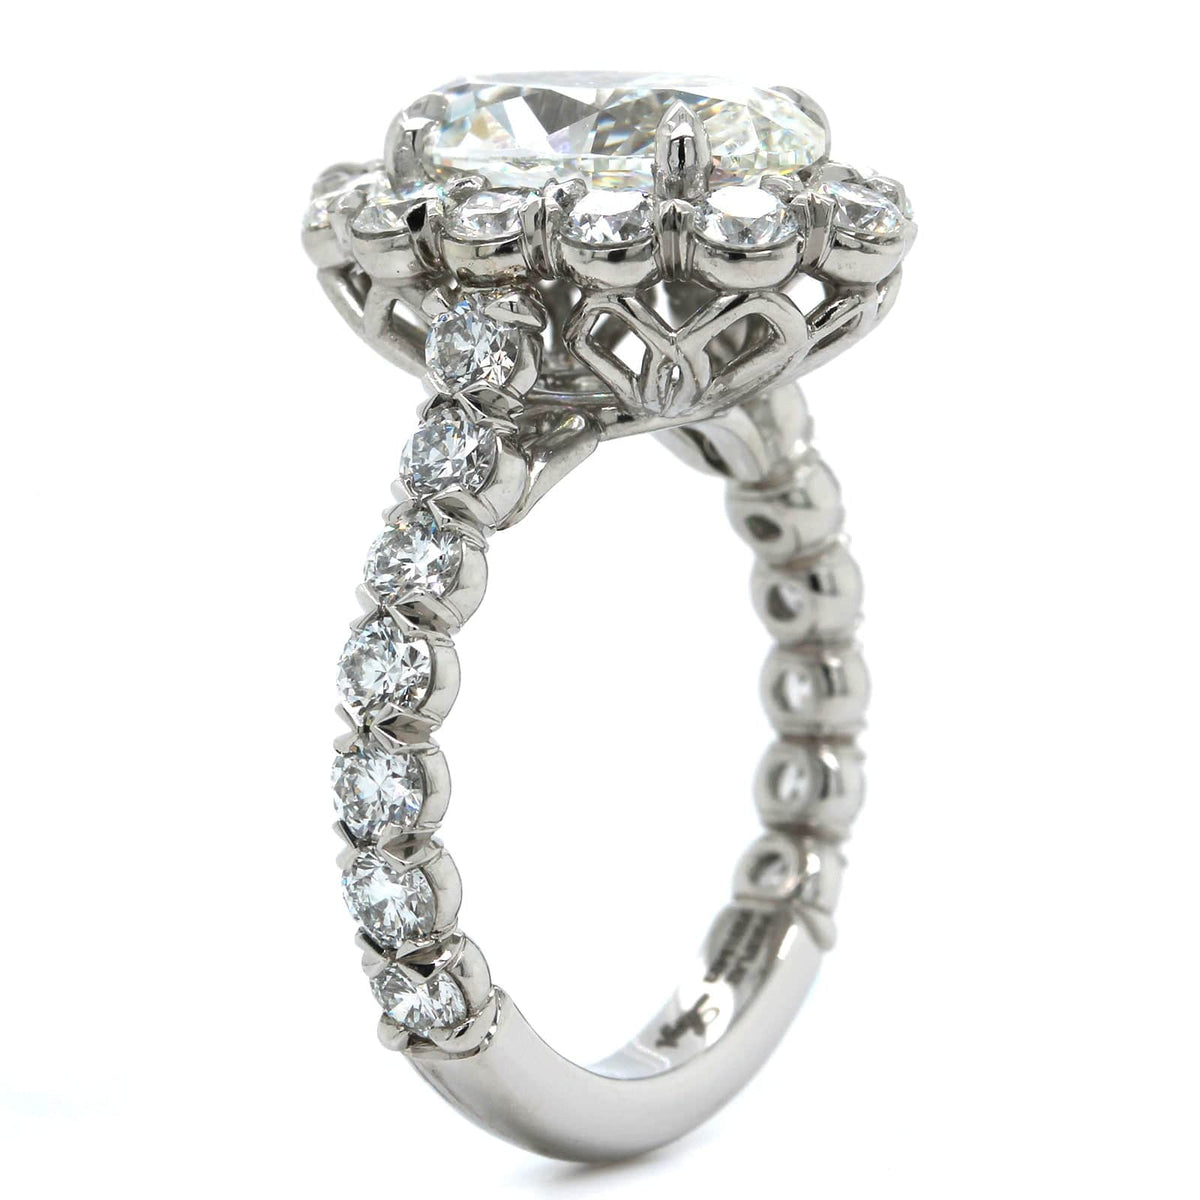 Platinum Oval Cut Diamond Engagement Ring